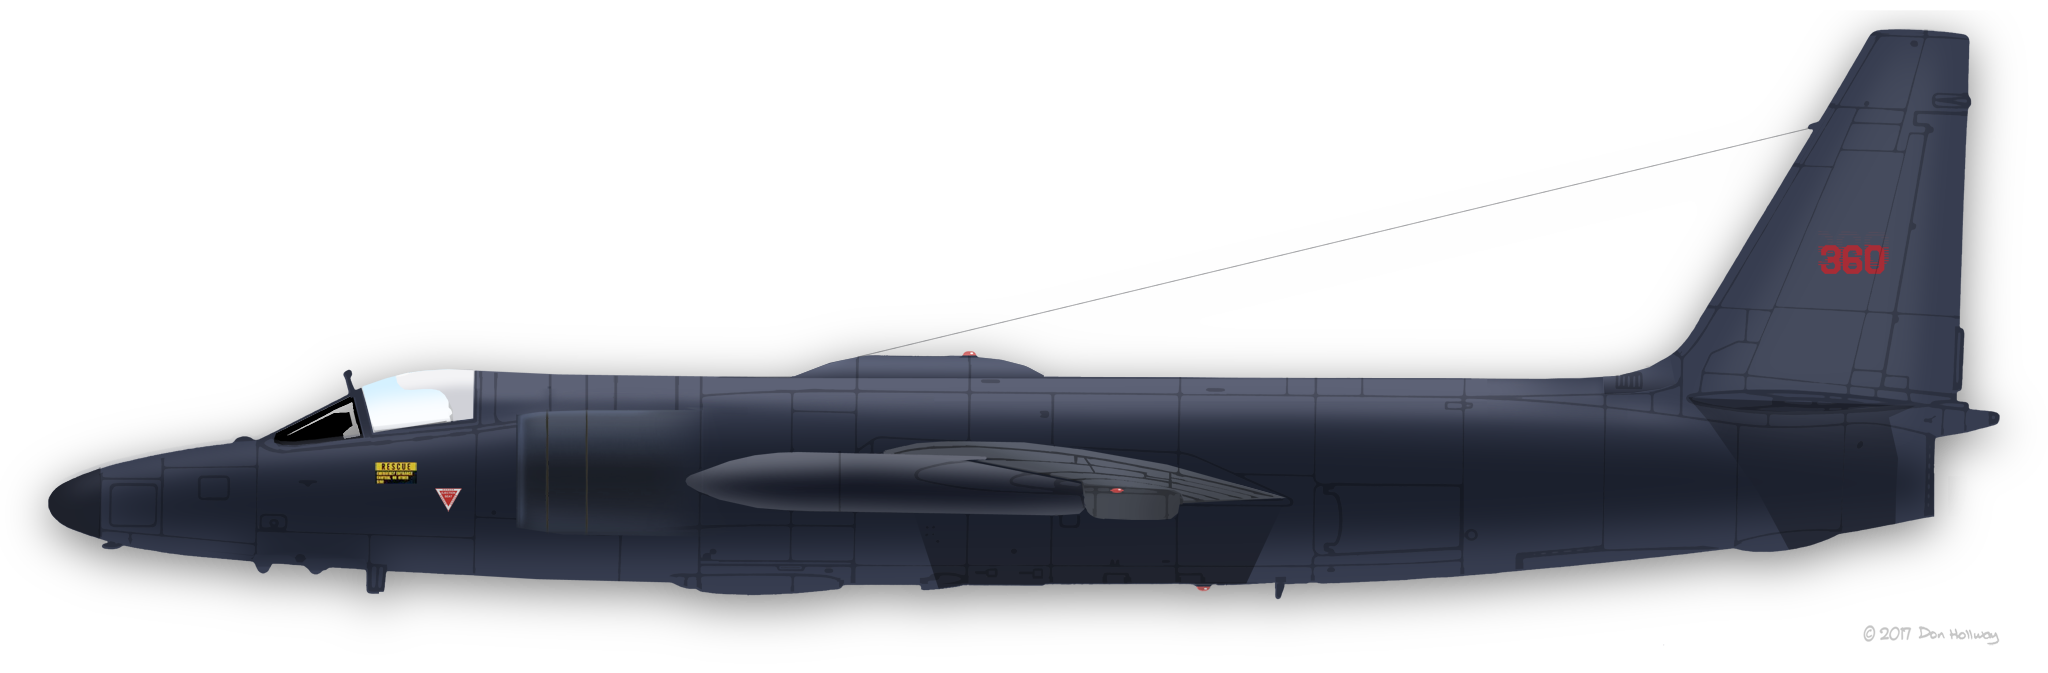 u-2c-profile.png